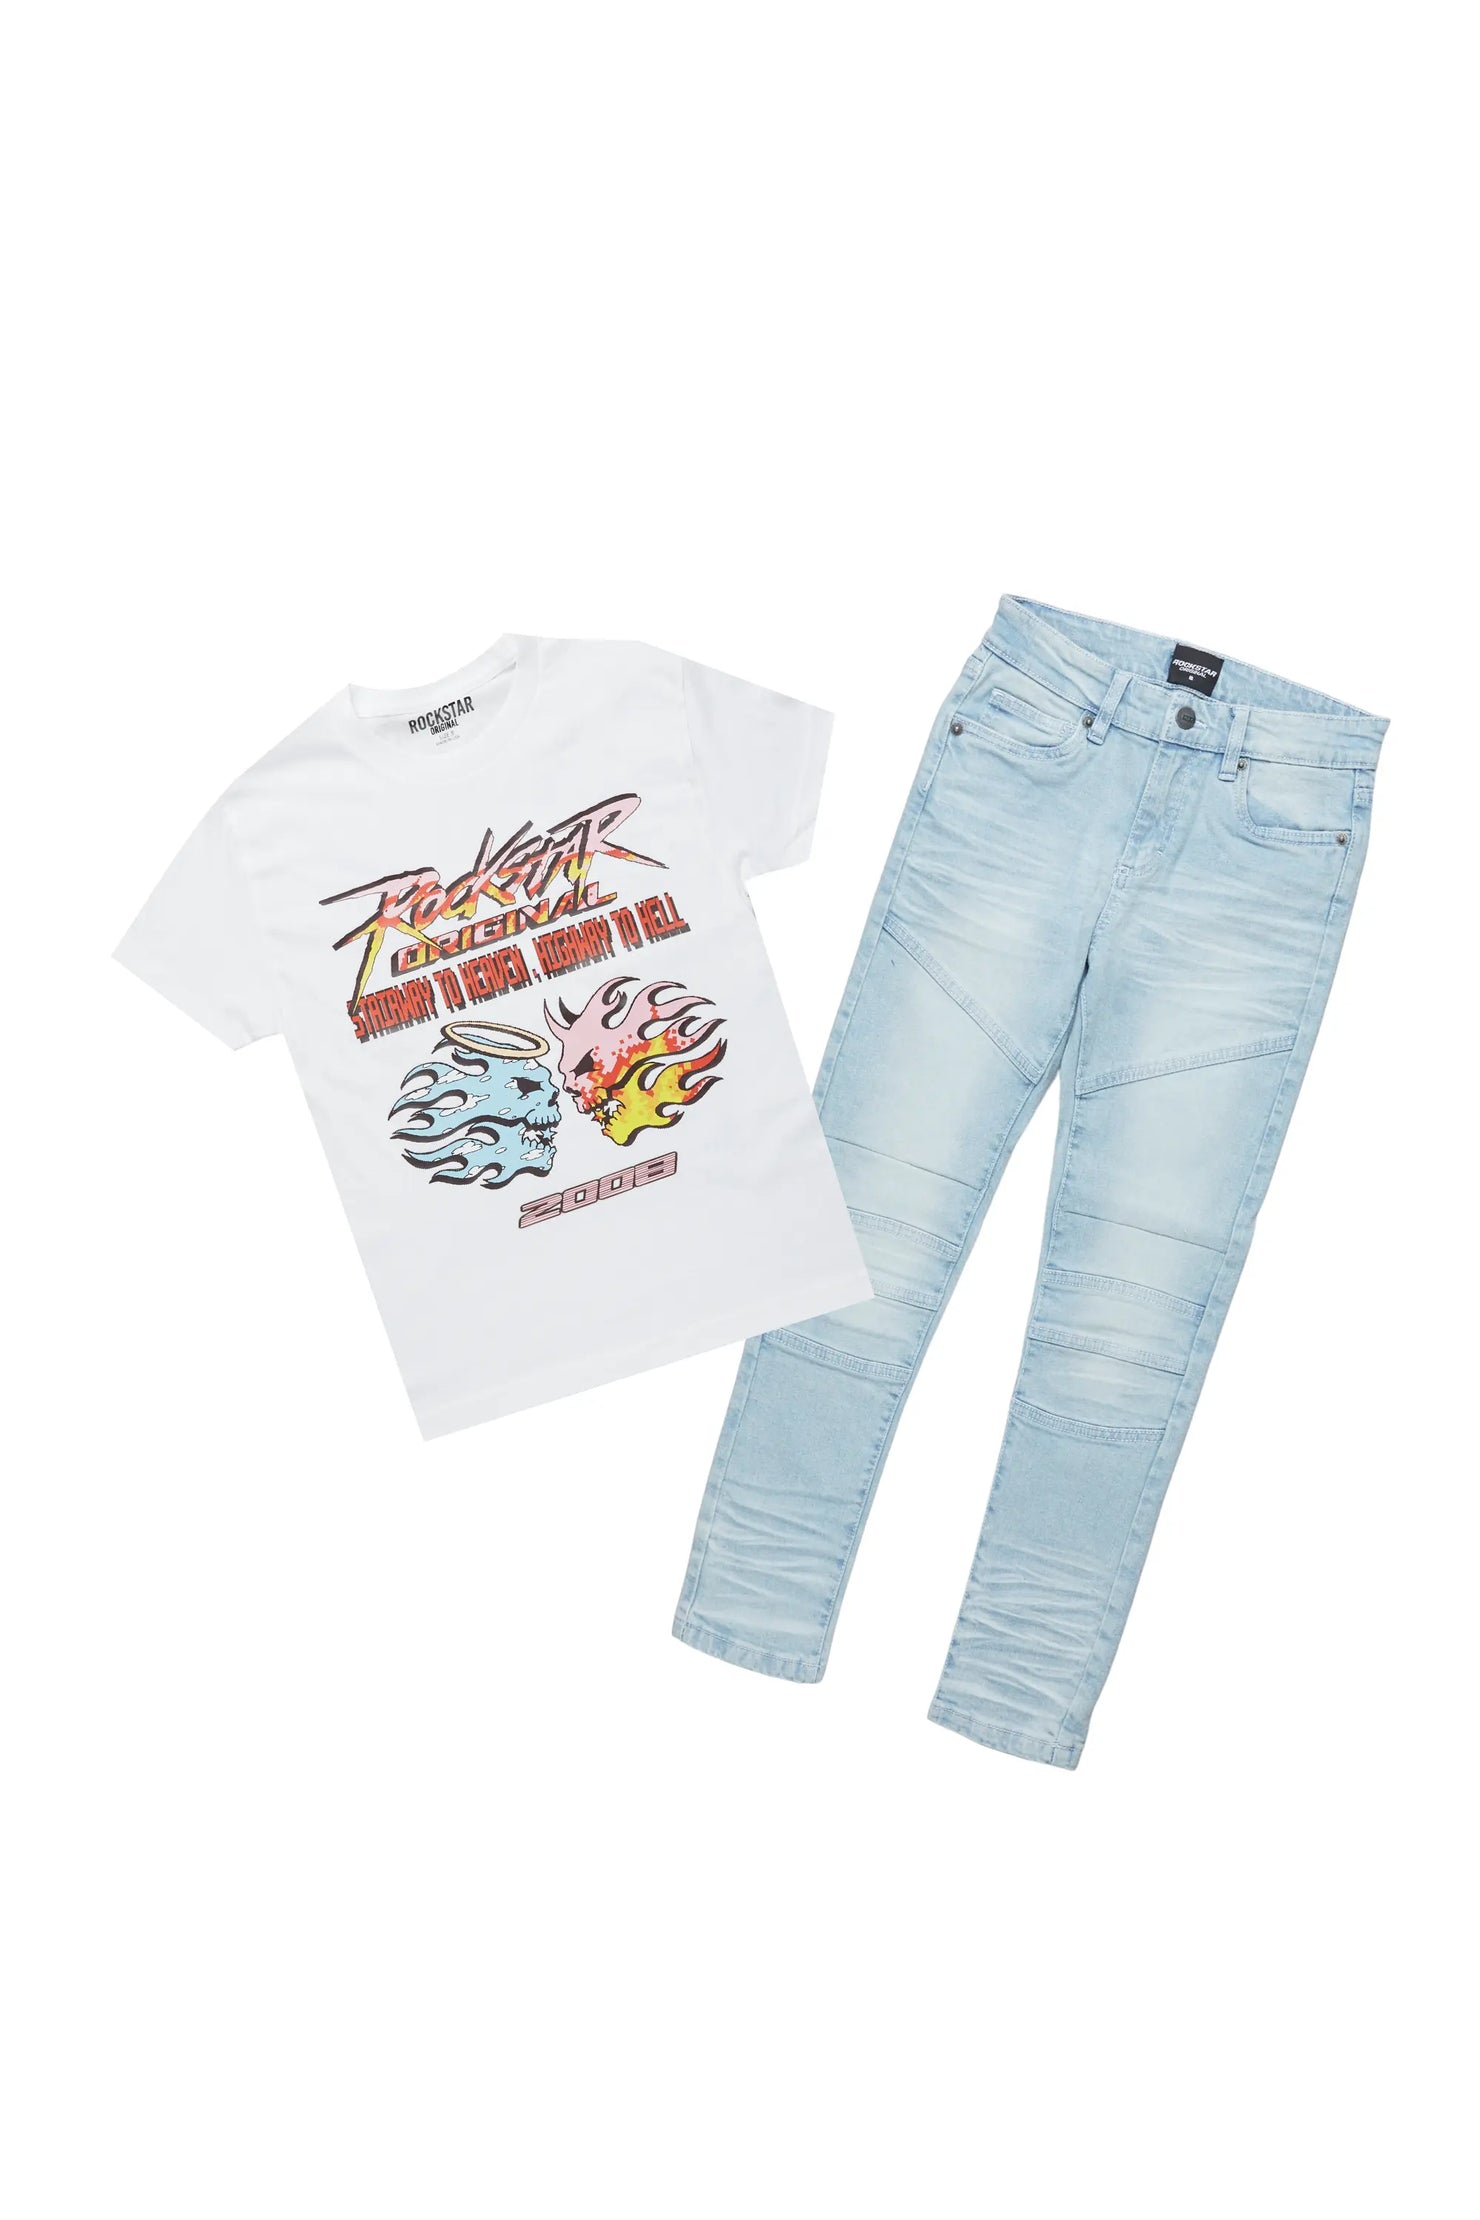 Boys Eddy White/Light Blue T-Shirt/Skinny Jean Set